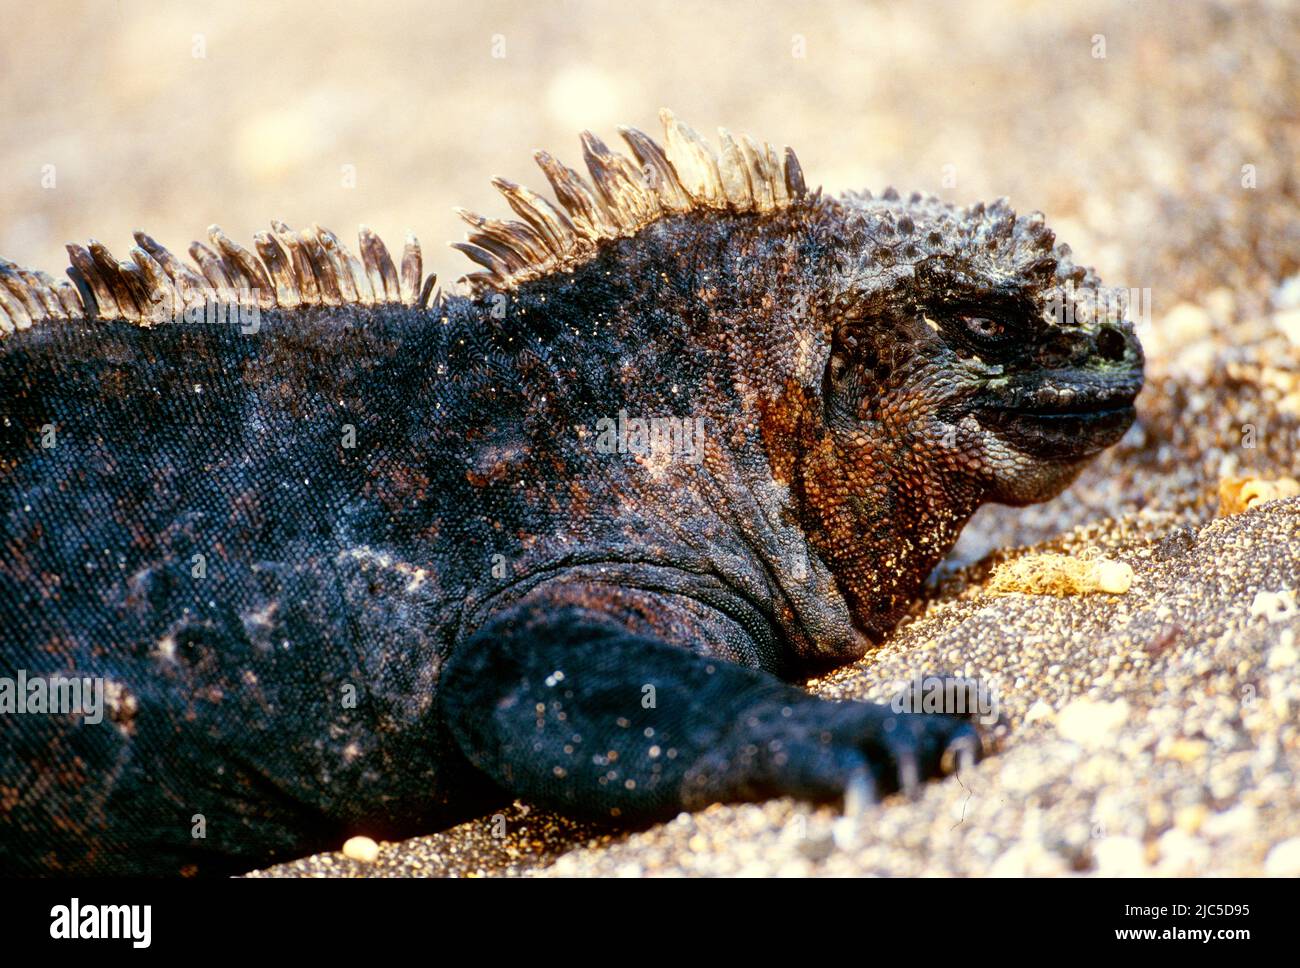 Meerechse, Amblyrhynchus cristatus, Iguanidae, Reptil, Tier auf Fels, Isabela, Galapagos Stock Photo